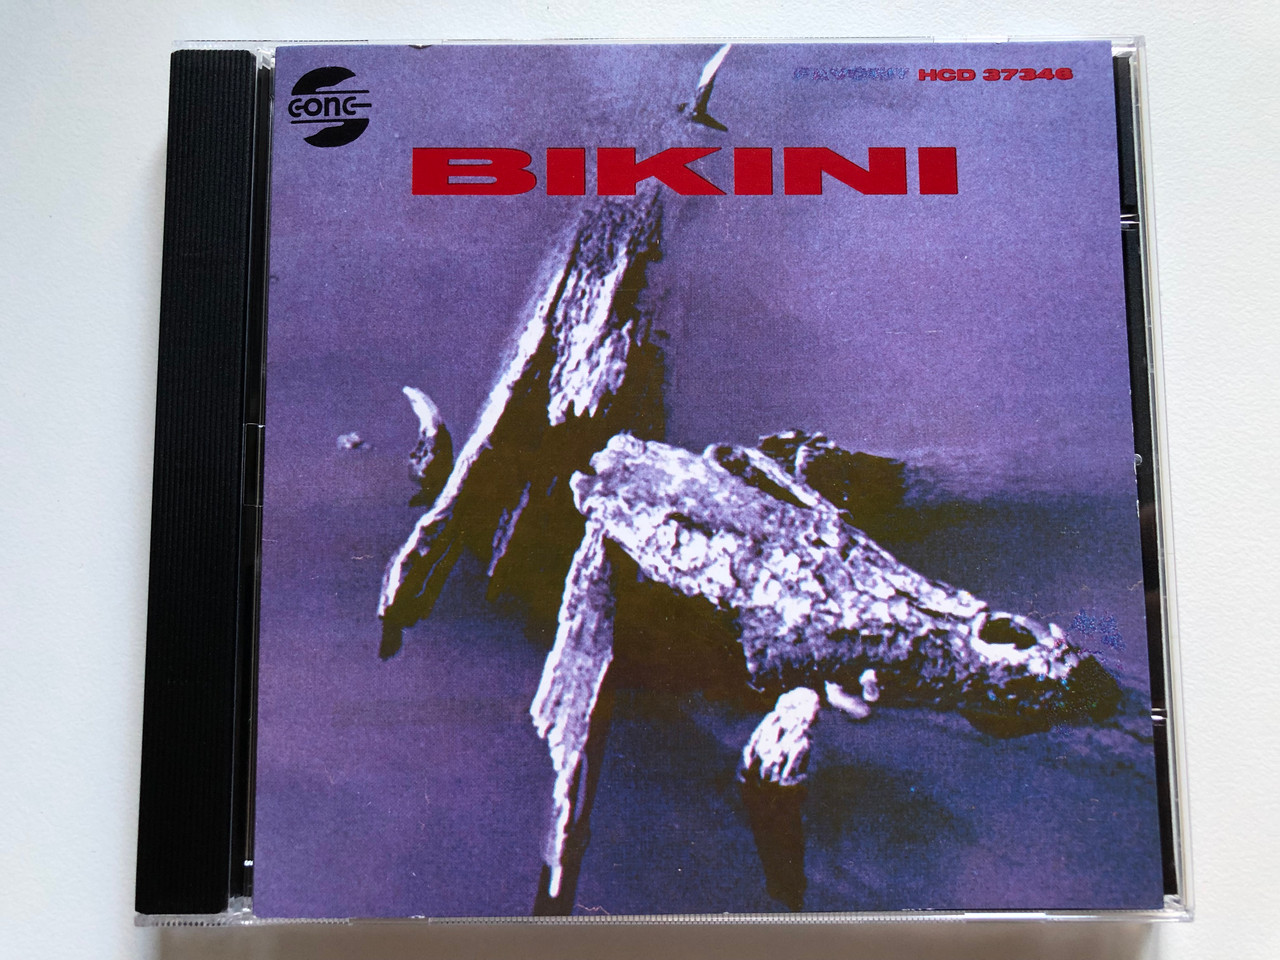 Bikini - Válogatás CD / Gong Audio CD 1989 / HCD 37346 - bibleinmylanguage